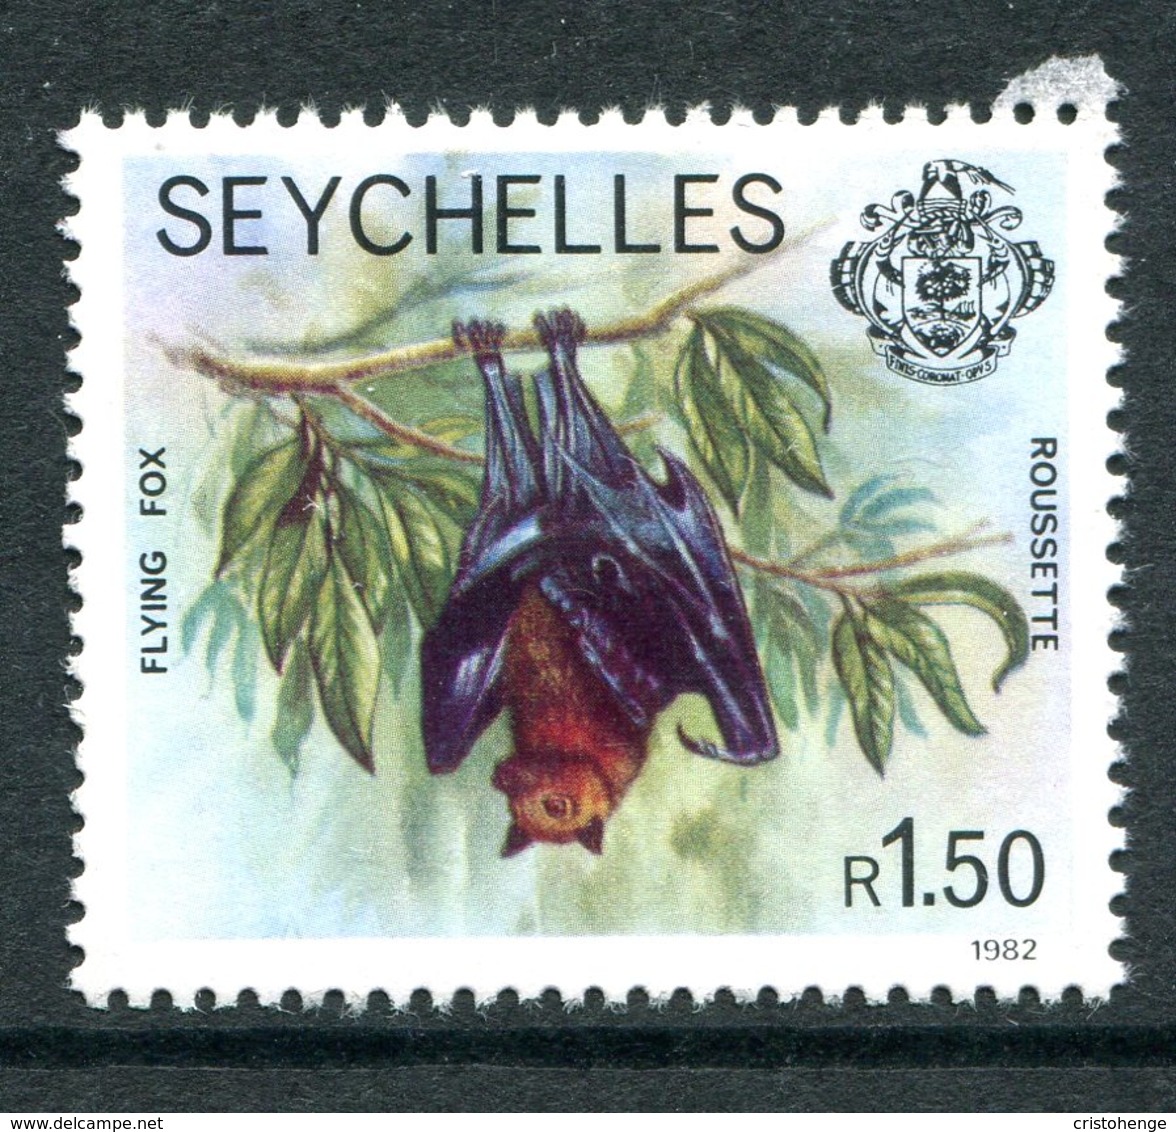 Seychelles 1977-84 Wildlie - 1982 Imprint Date - 1r50 Flying Fox MNH (SG 414B) - Seychelles (1976-...)